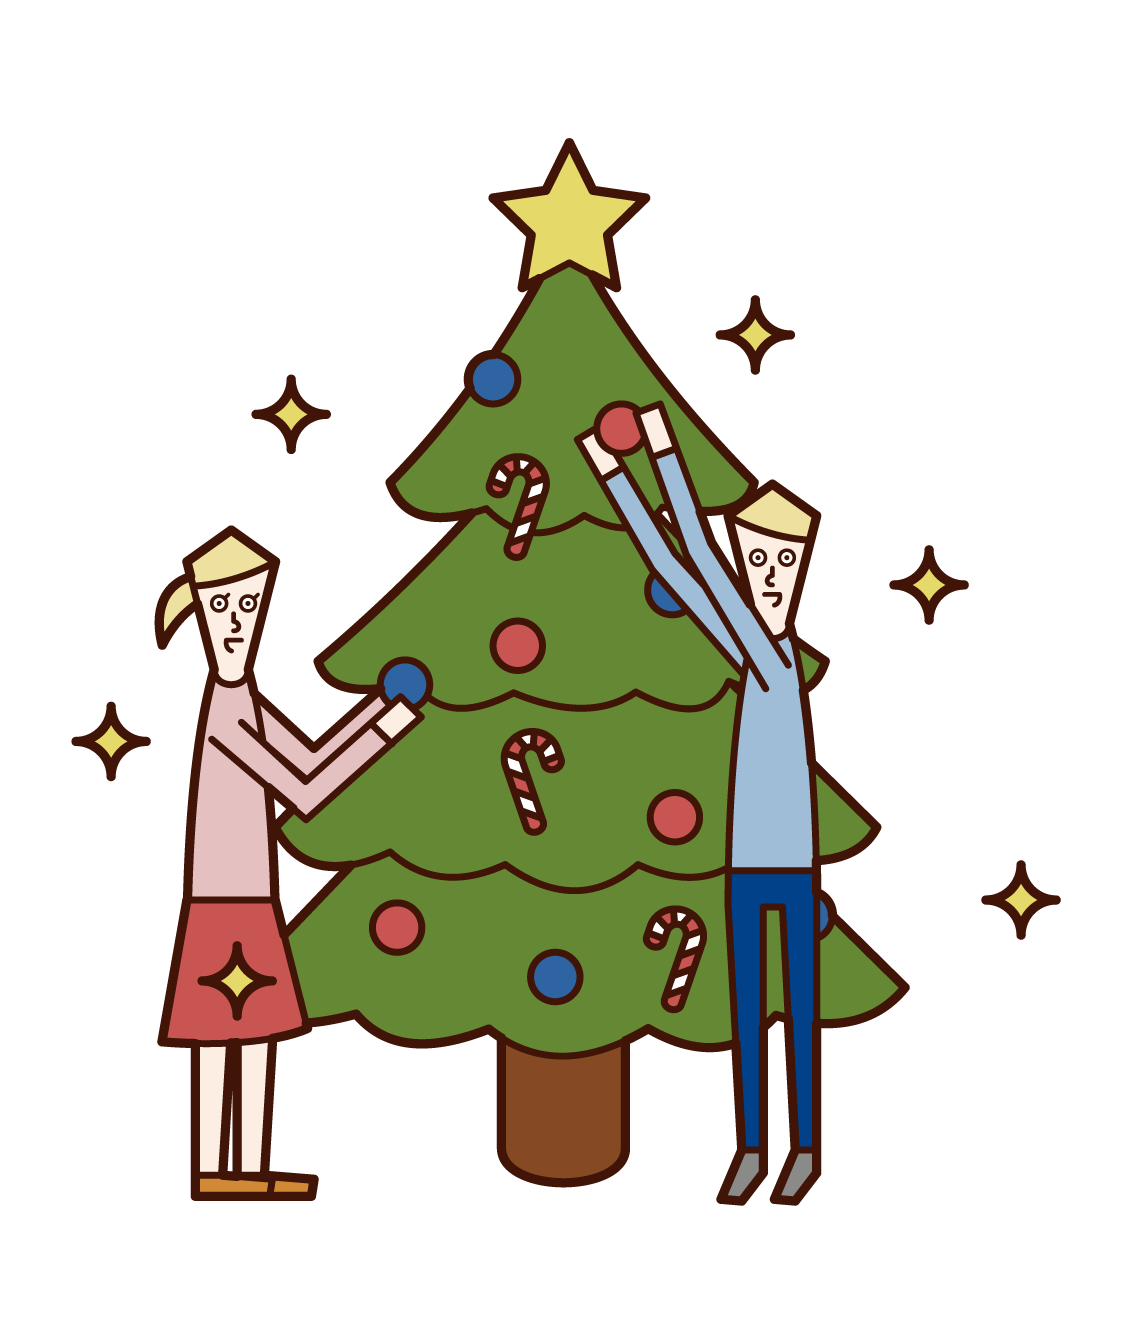 Illustrations of children (men and women) enjoying Christmas tree decorations